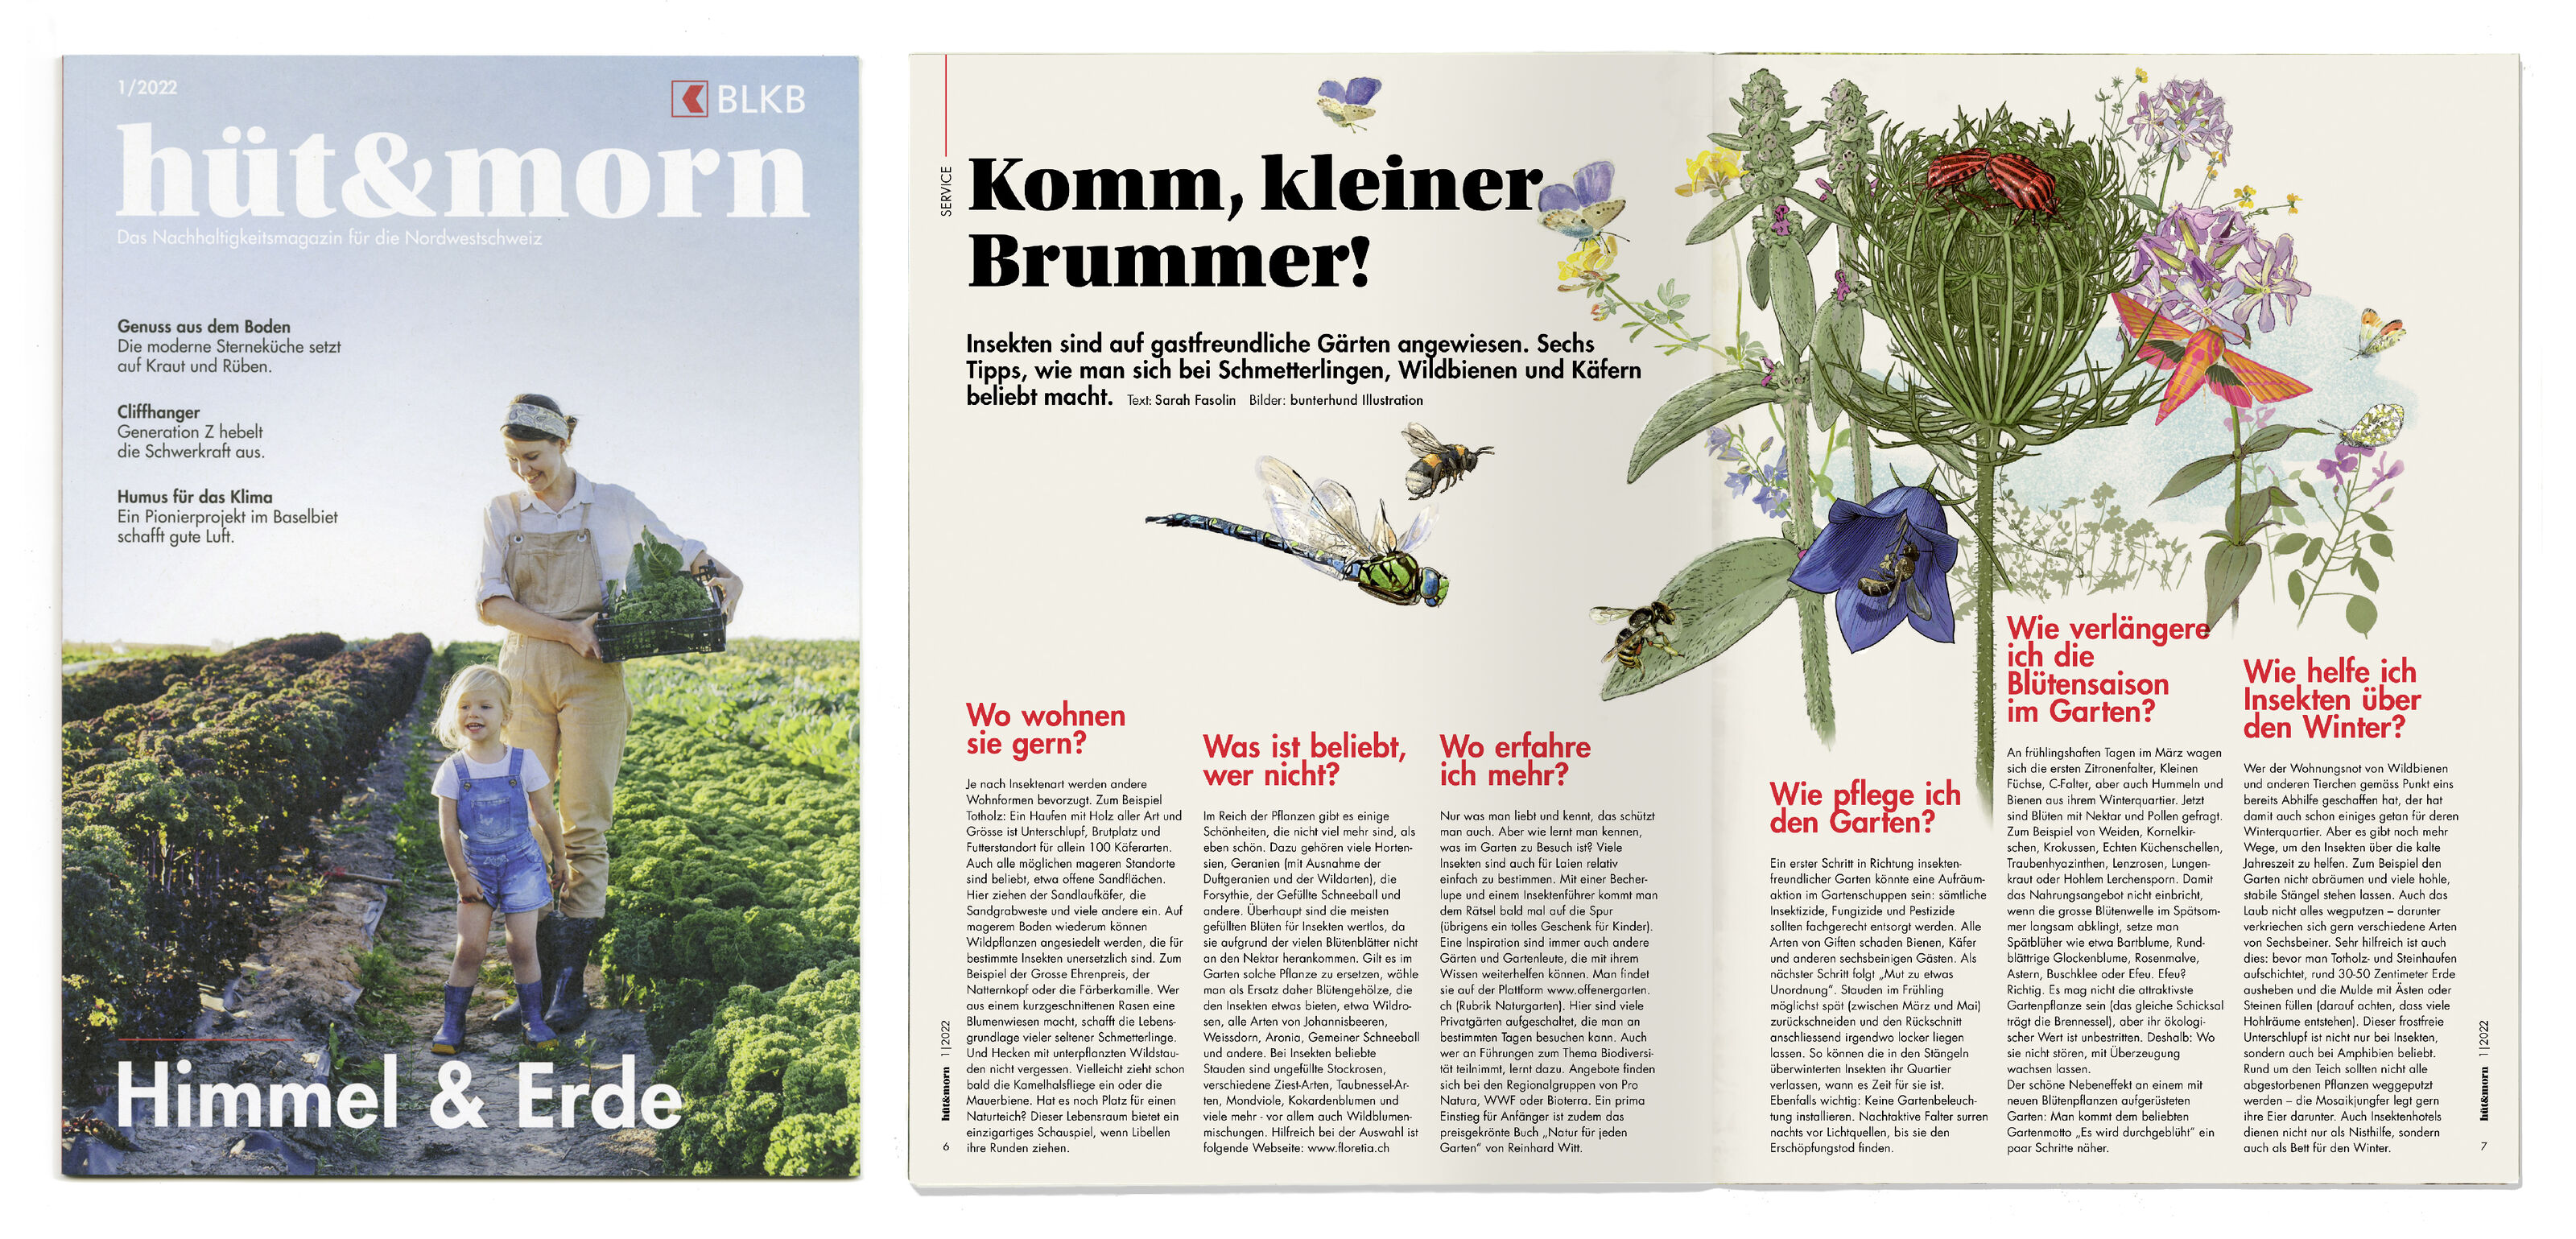 BLKB_Naturgarten_Biodiversitaet-Garten-BLKB-Magazin-htmorn_bunterhund-Illustration_2